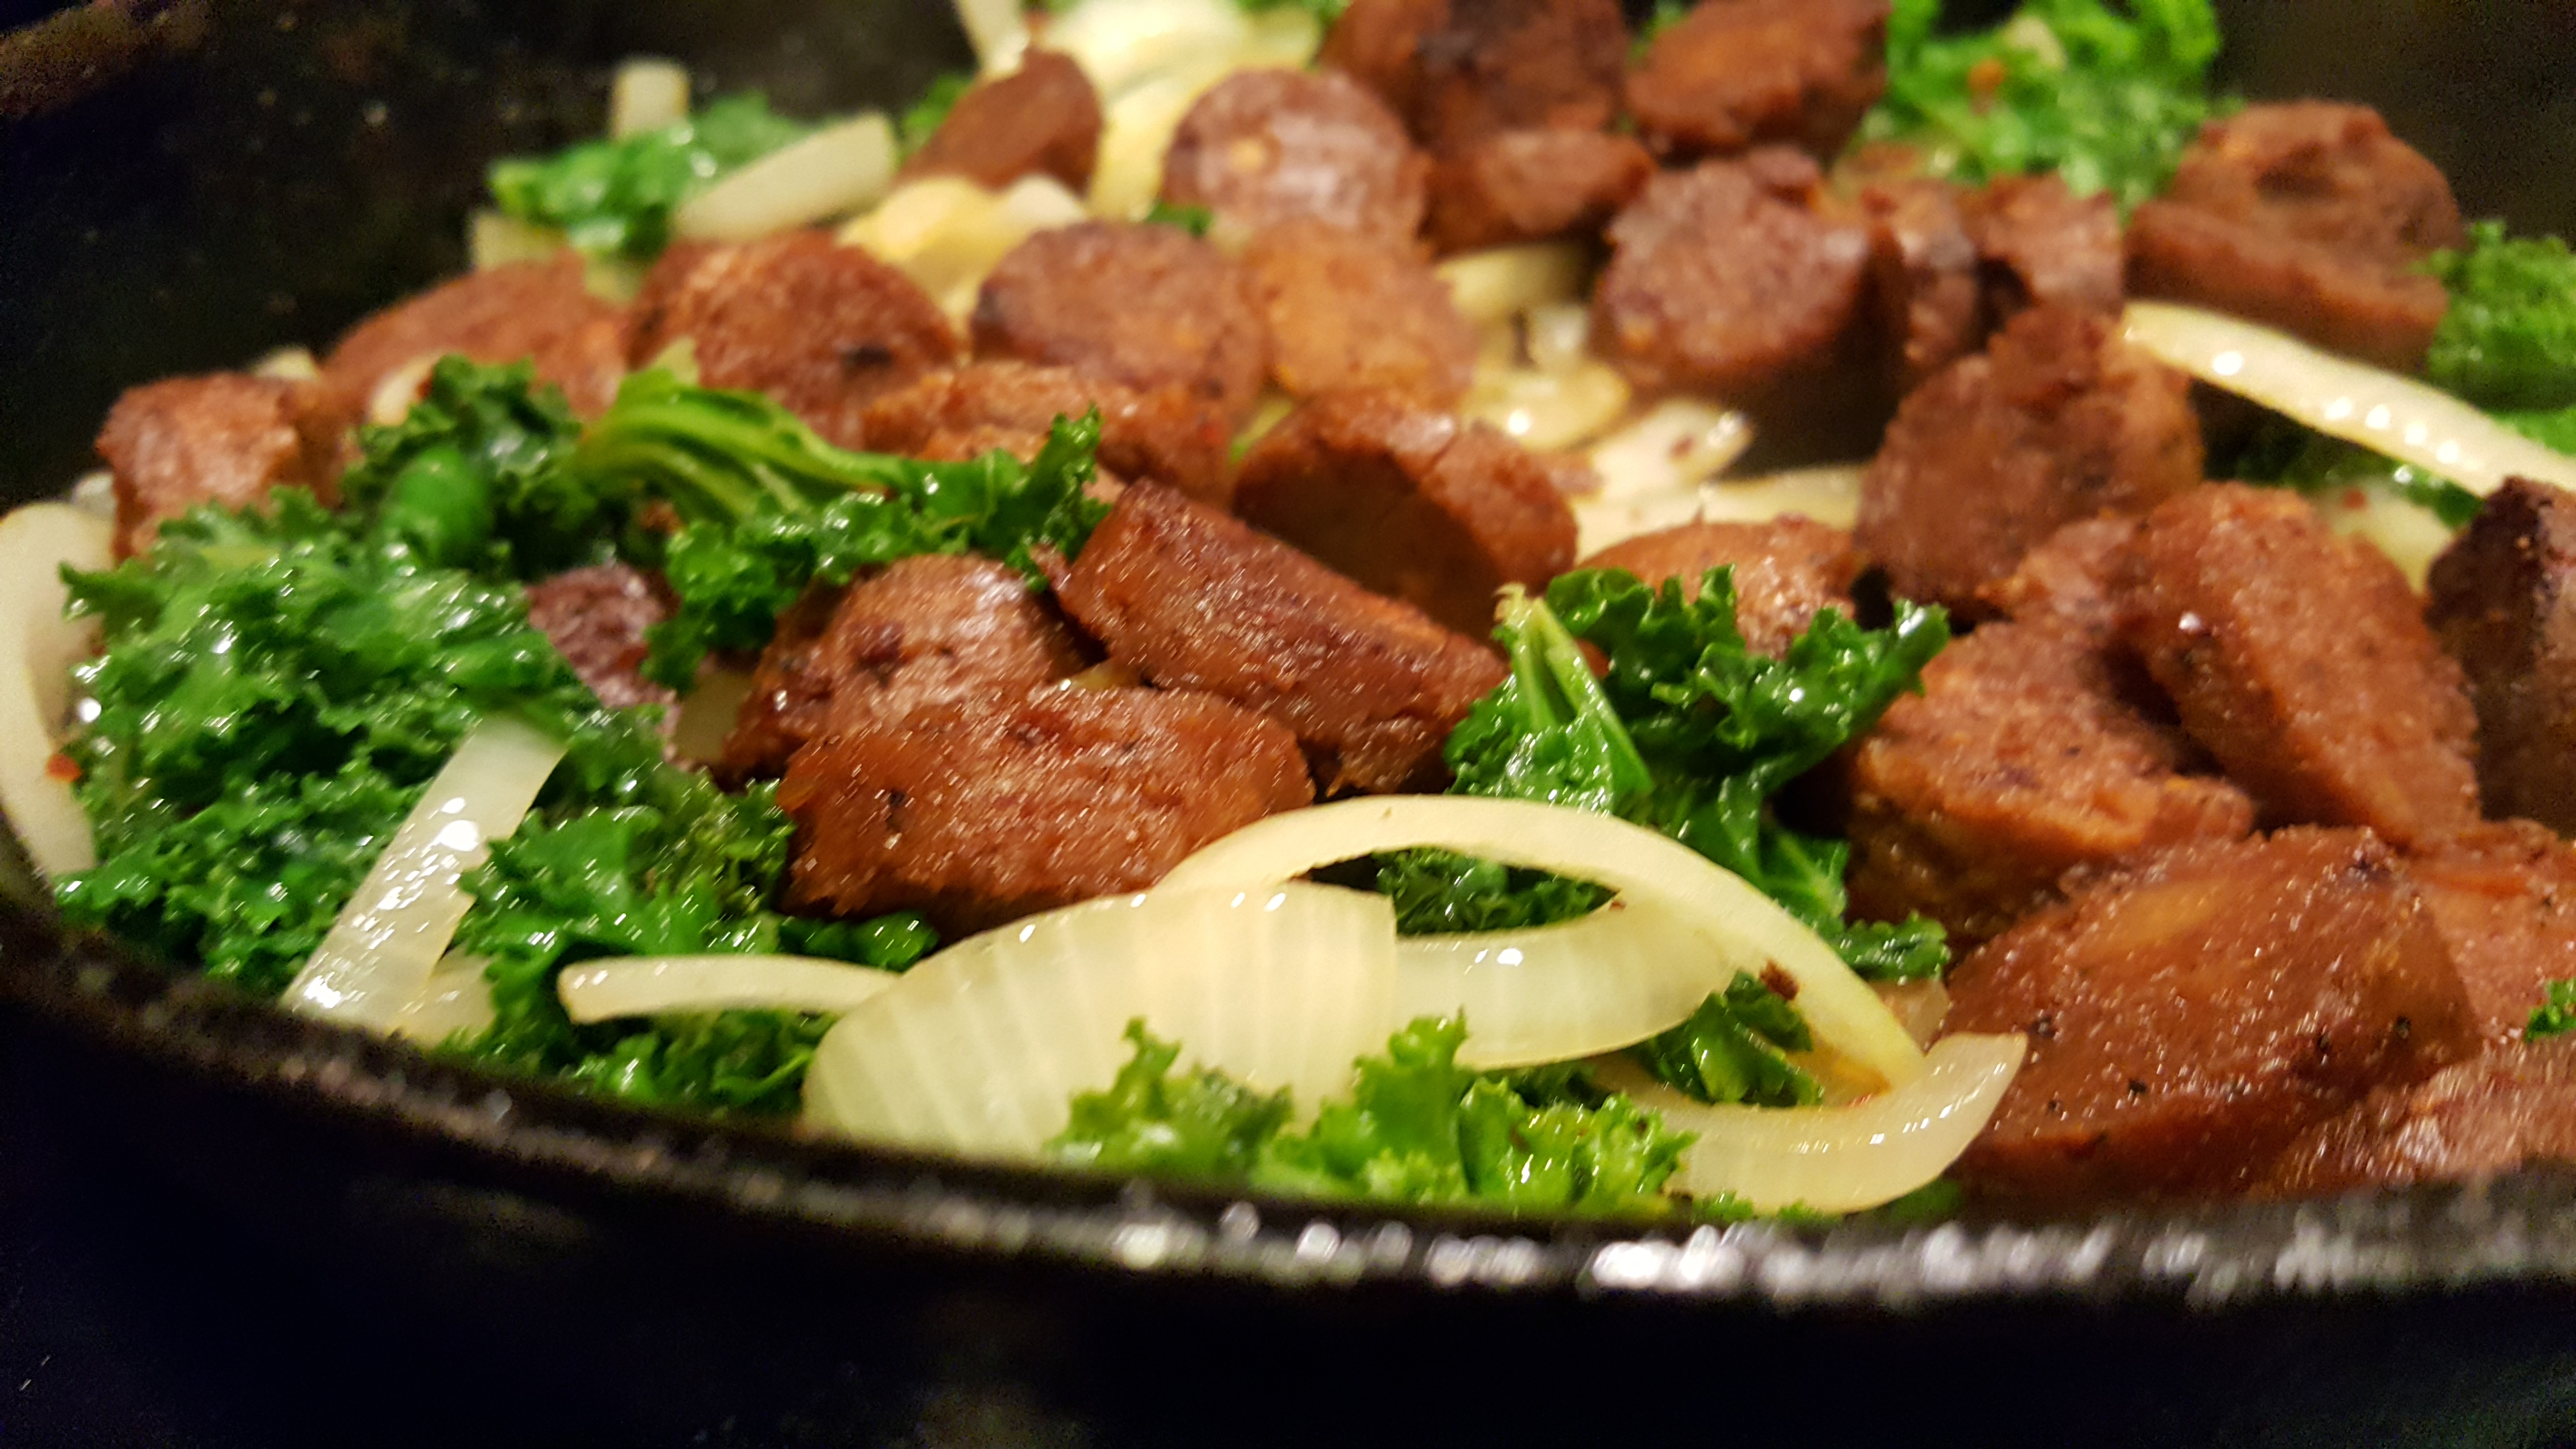 Field Roast®, Onions, and Kale